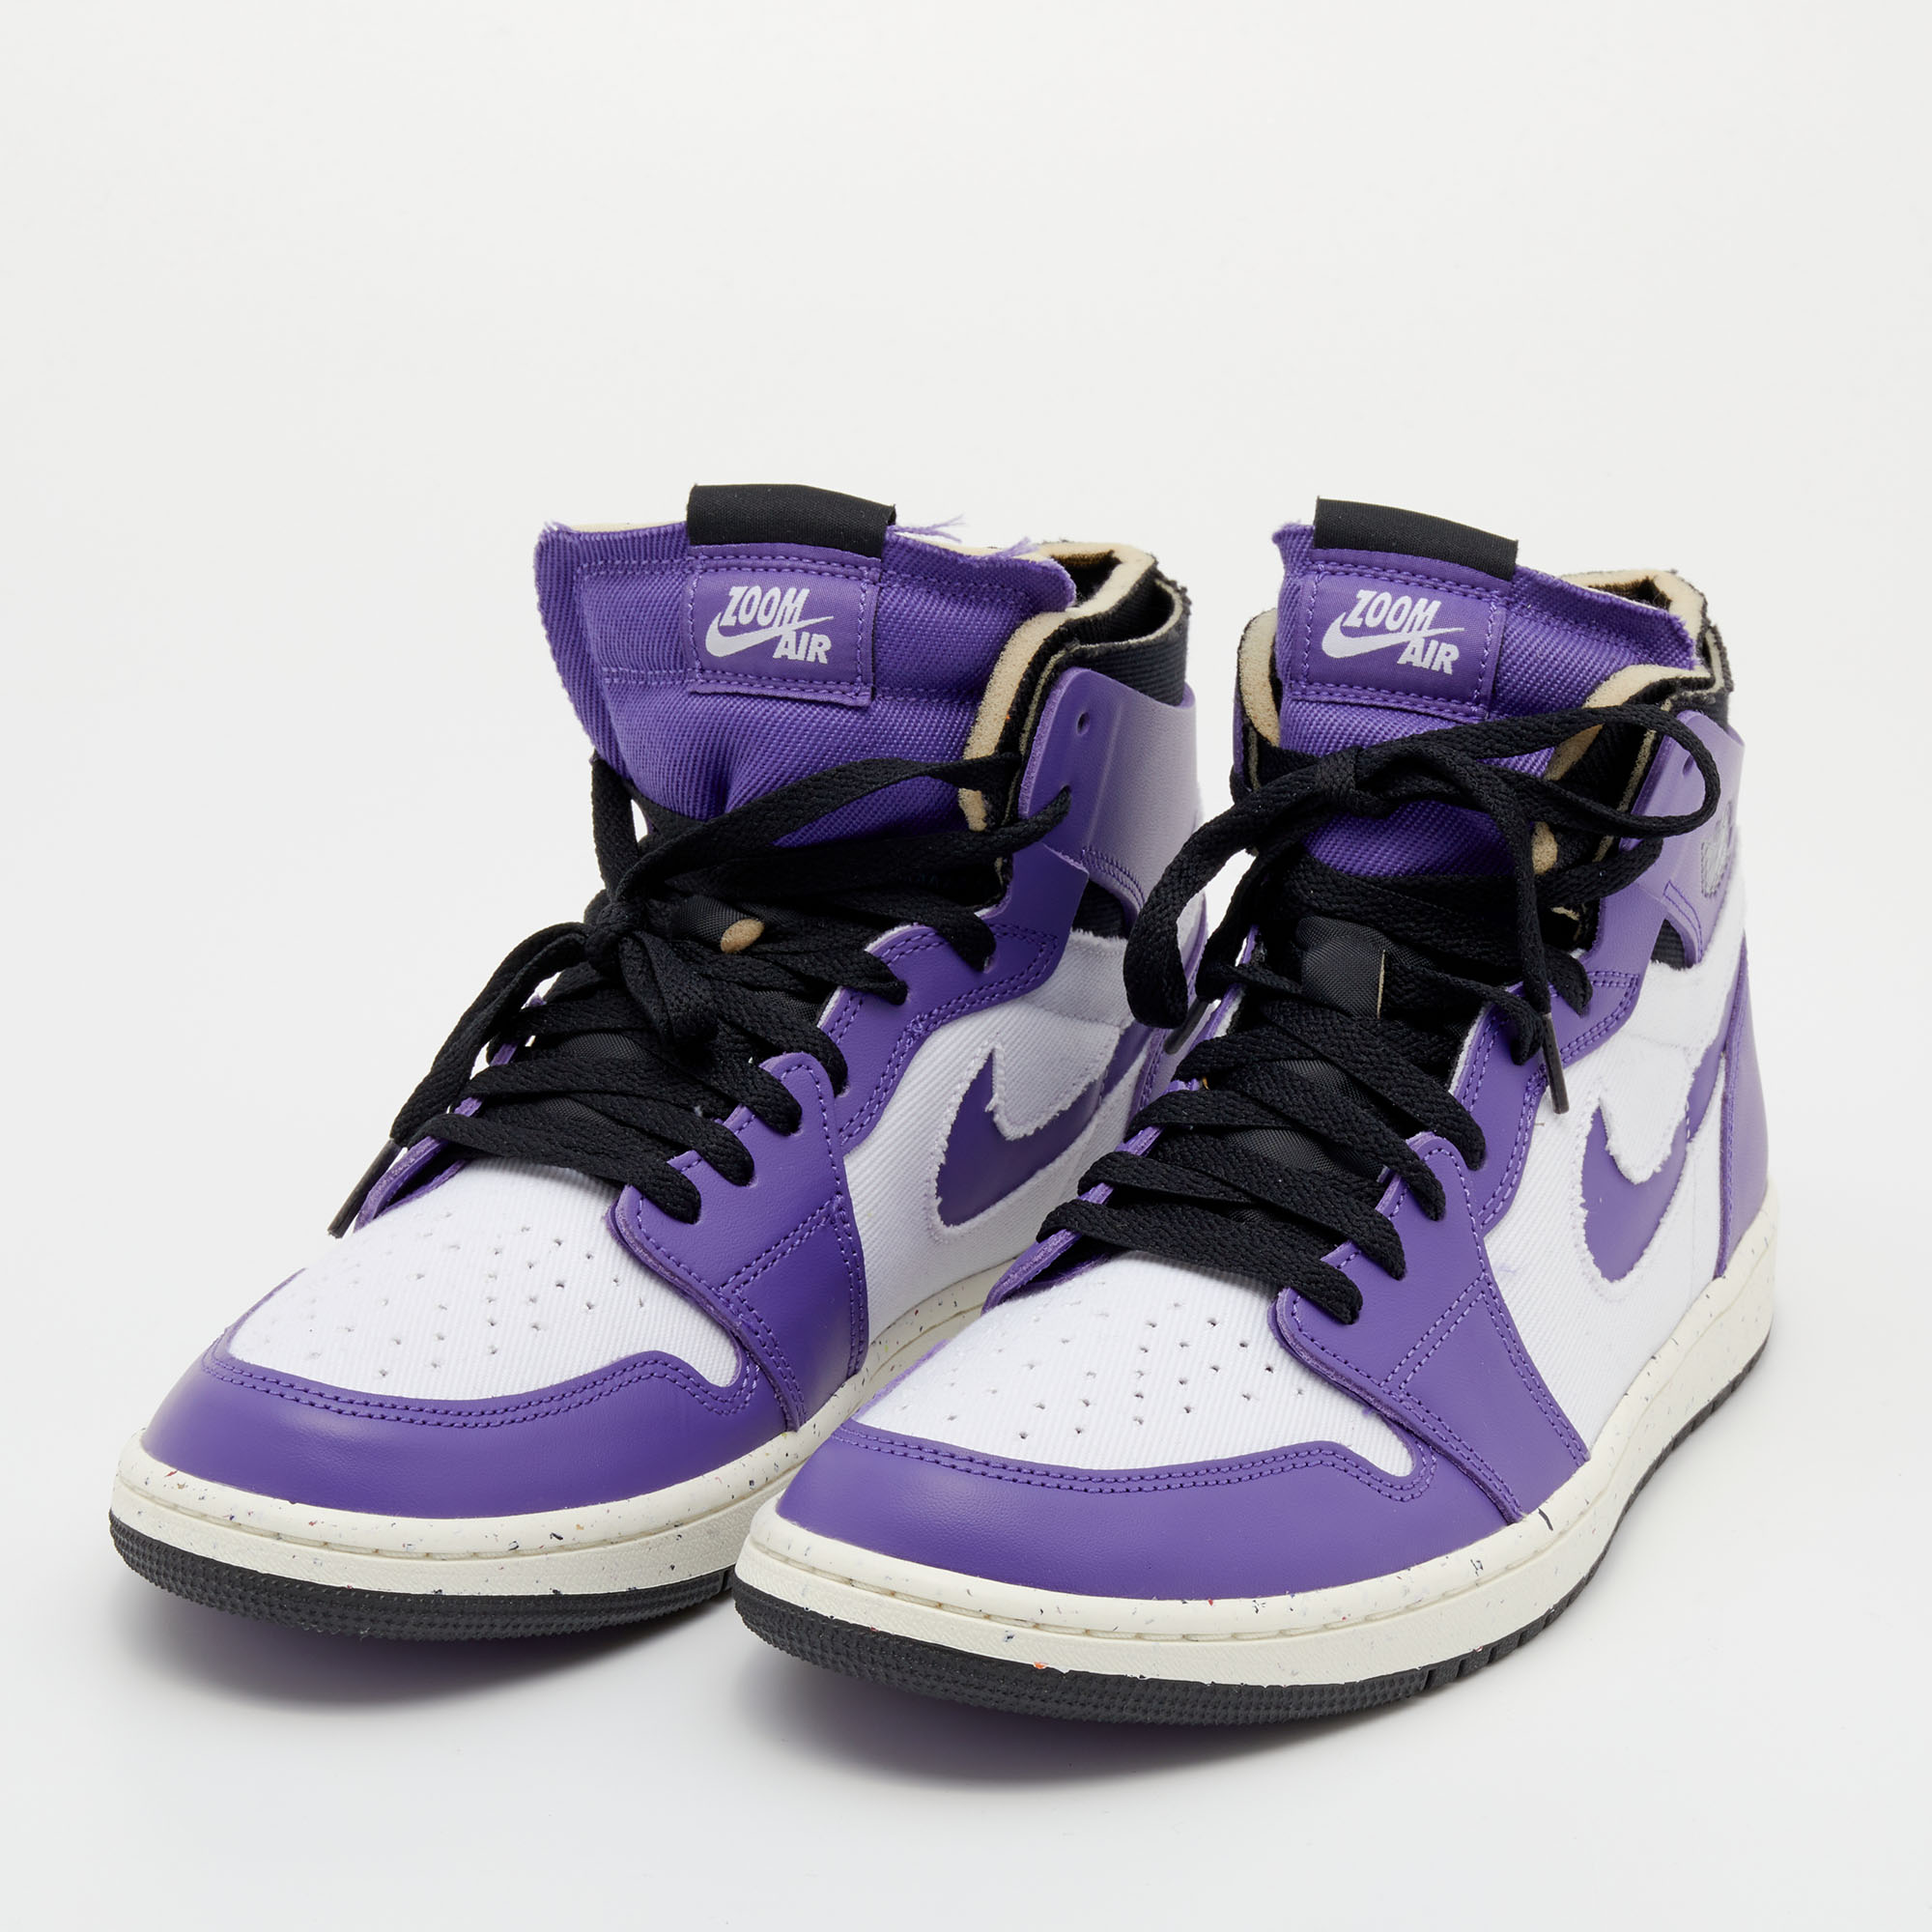 

Air Jordan Purple/White Leather And Fabric Air Jordan 1 Zoom Air CMFT Sneakers Size